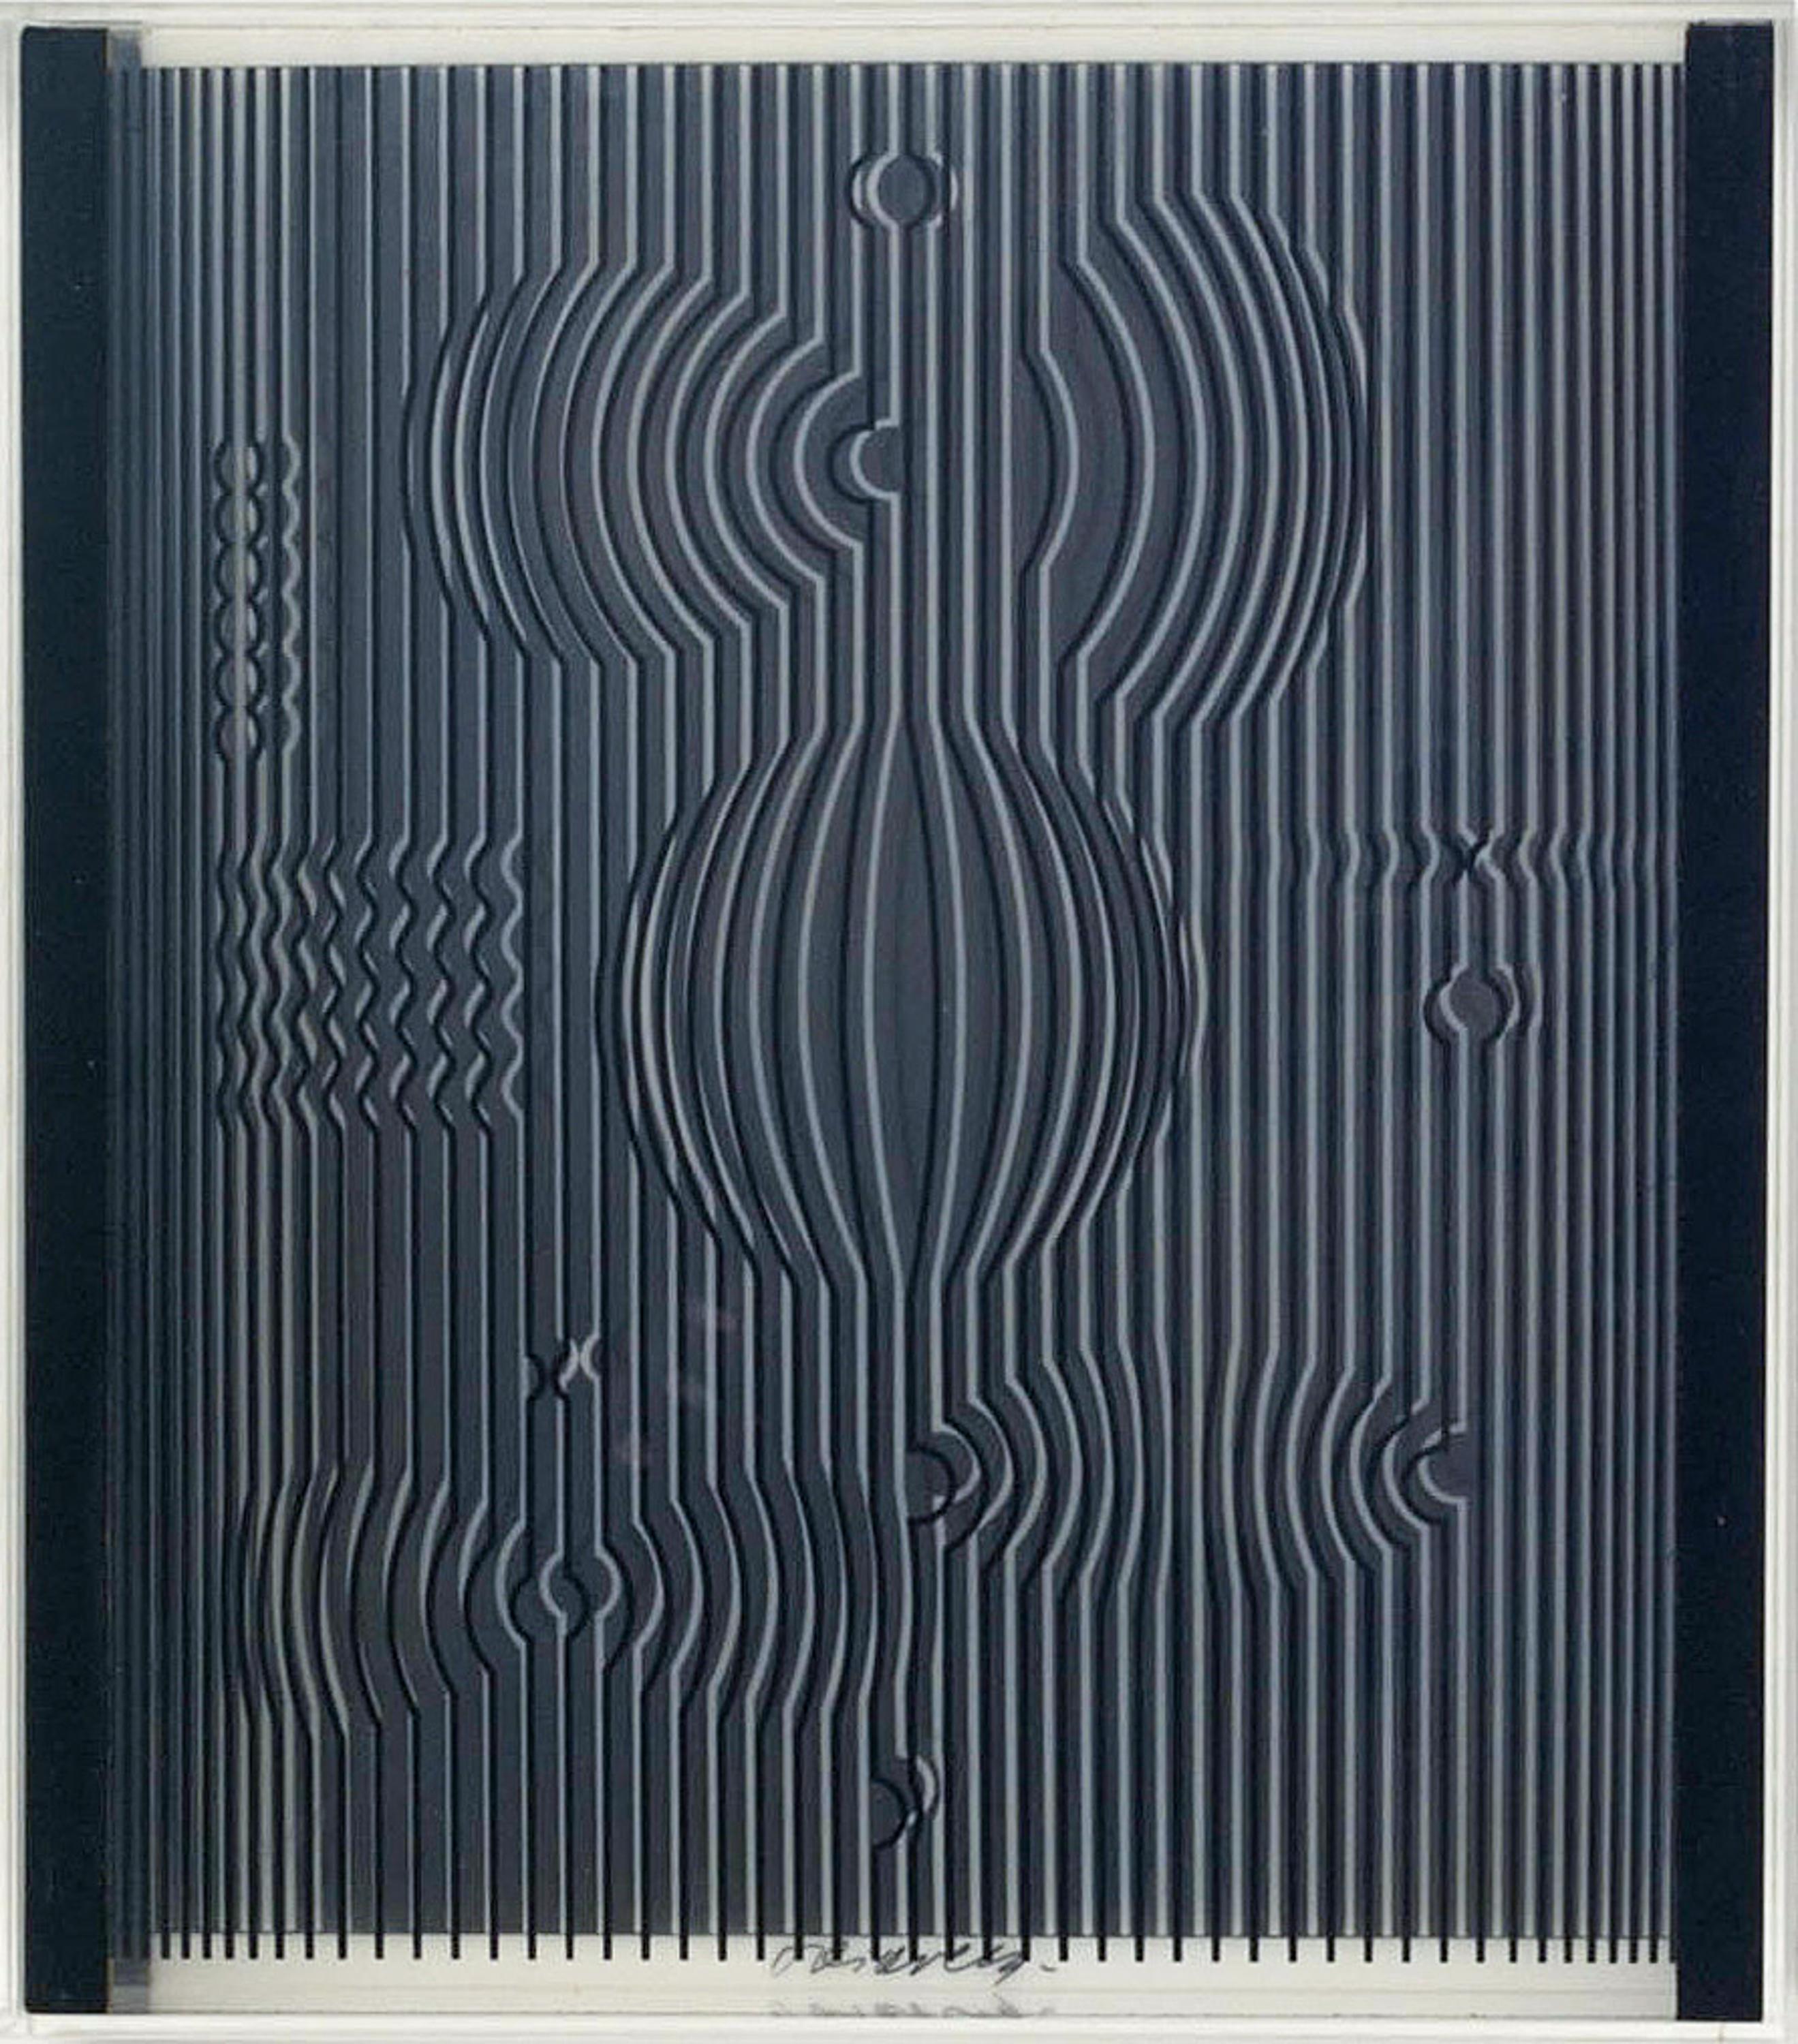 French Optical Art Victor Vasarely Venus Silkscreen 1987 Edition 250